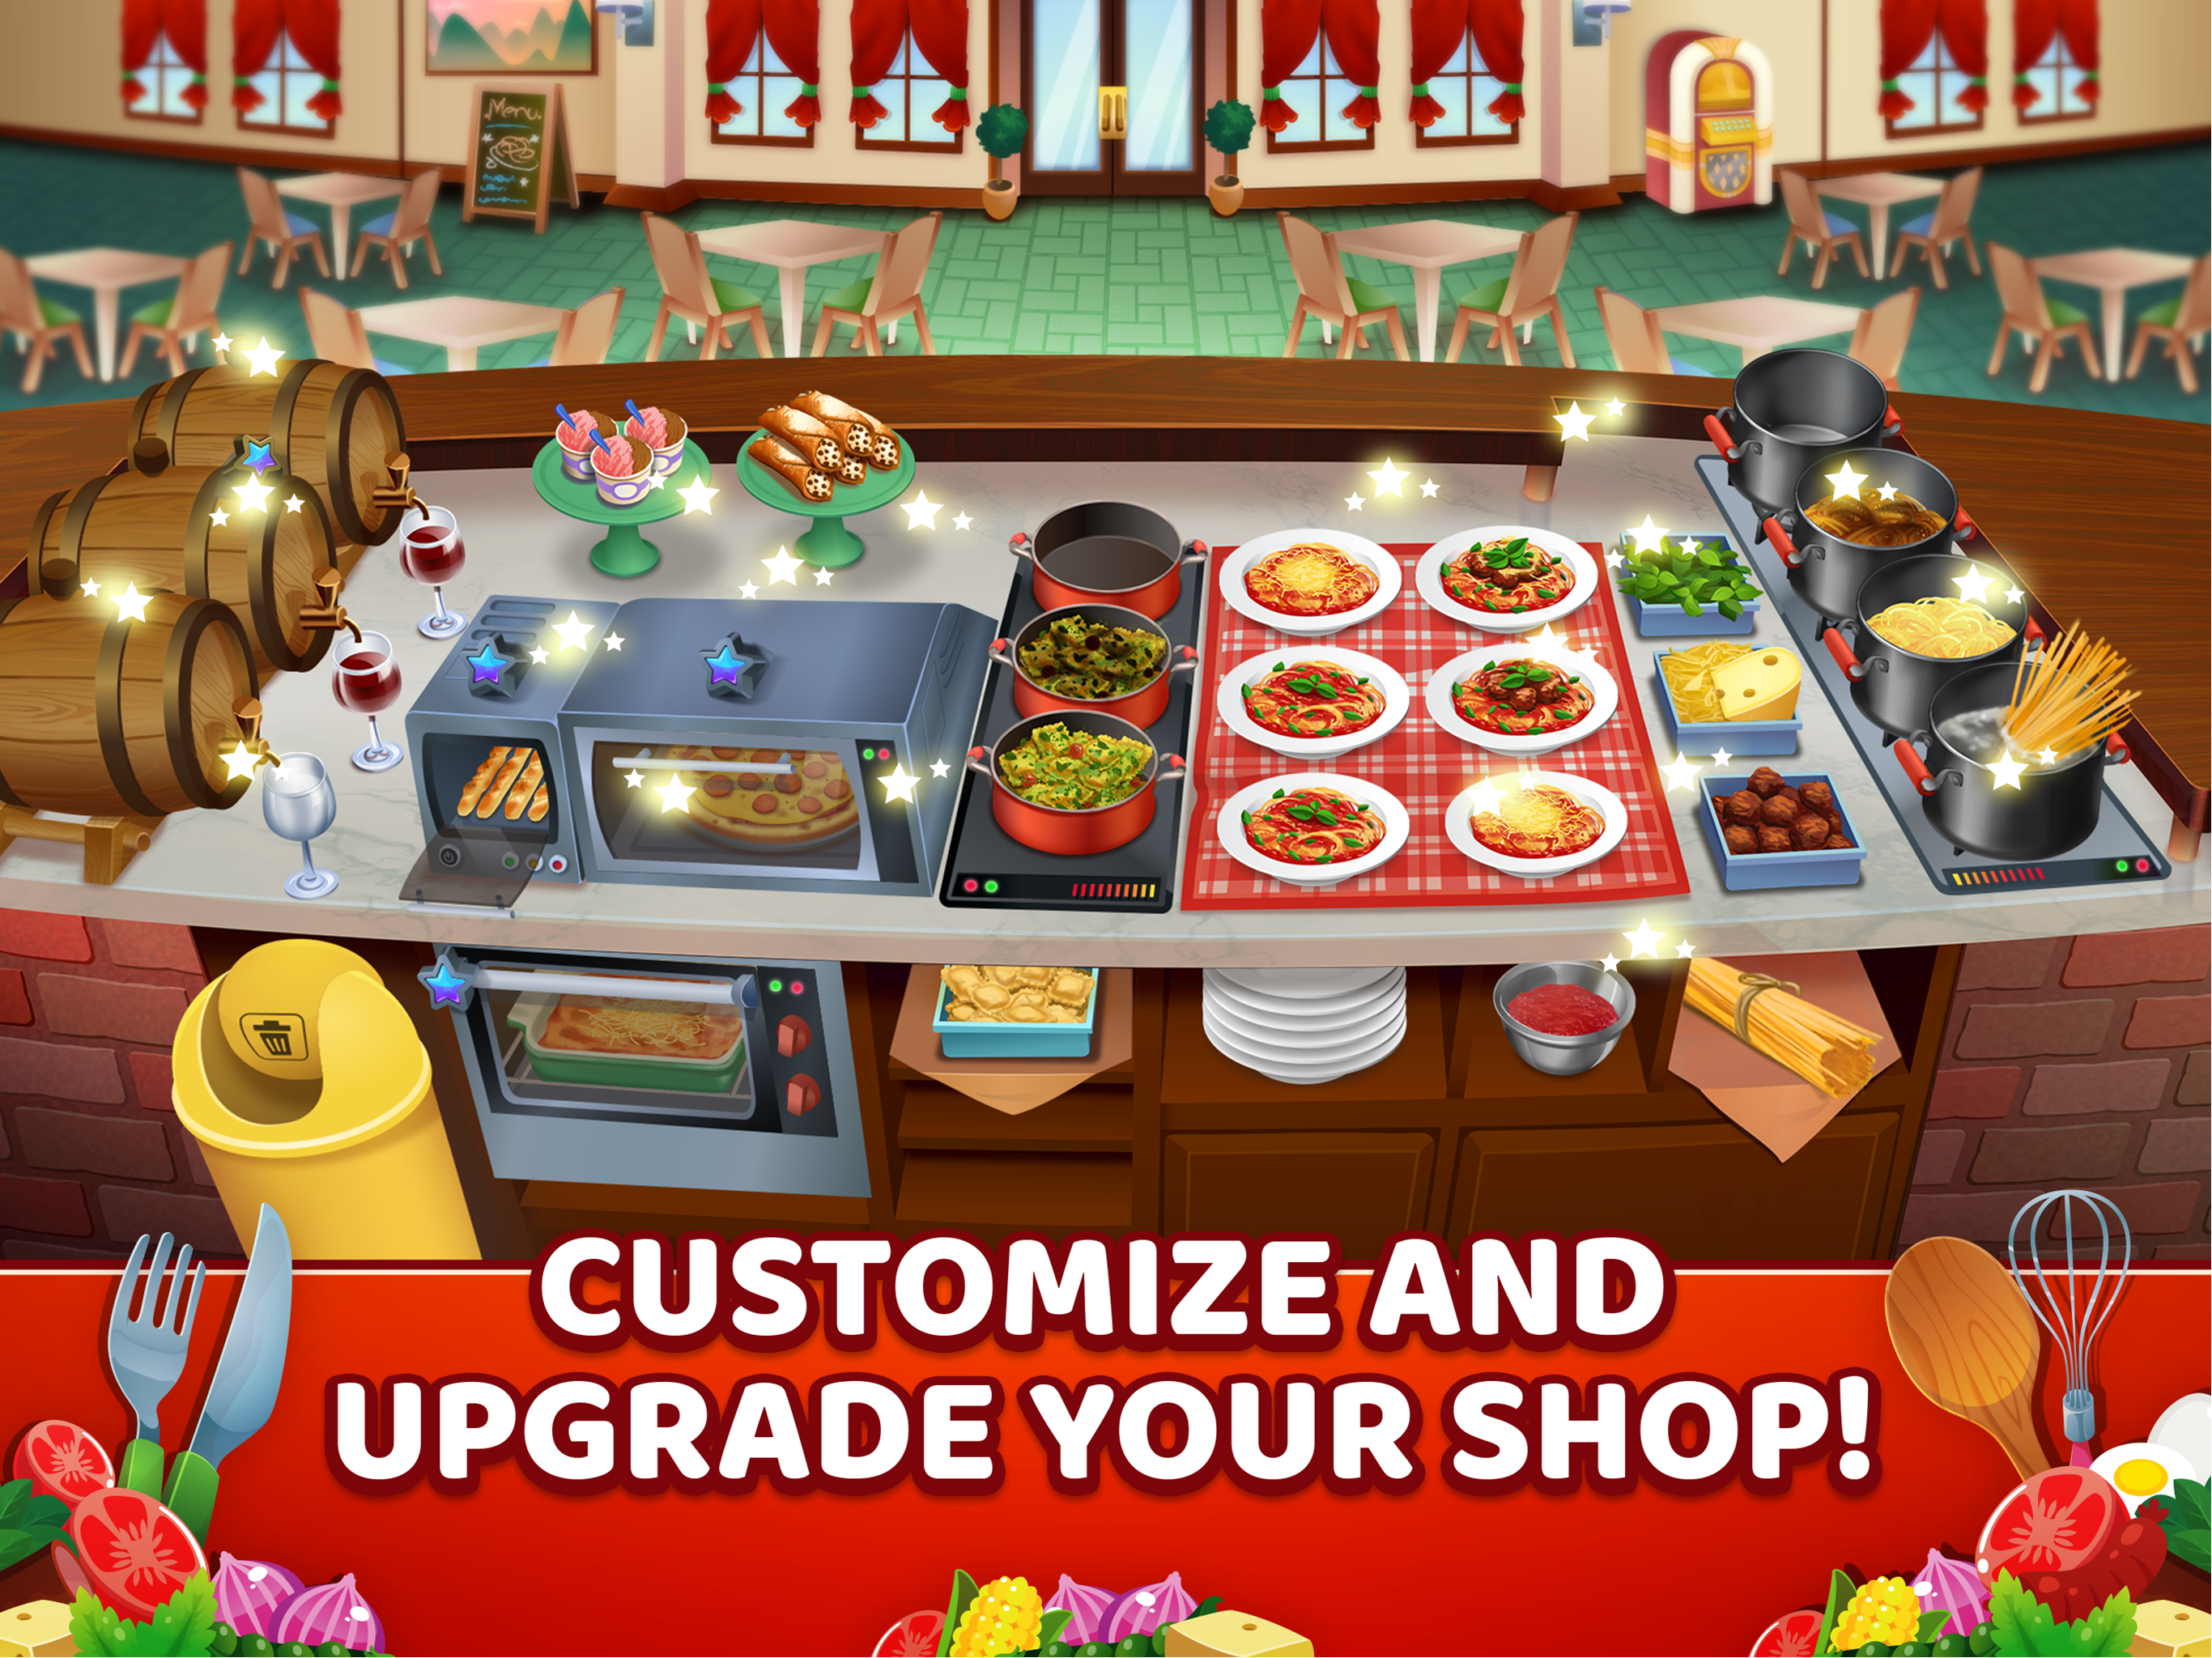 My Pasta Shop - Italian Restaurant Cooking Game遊戲截圖